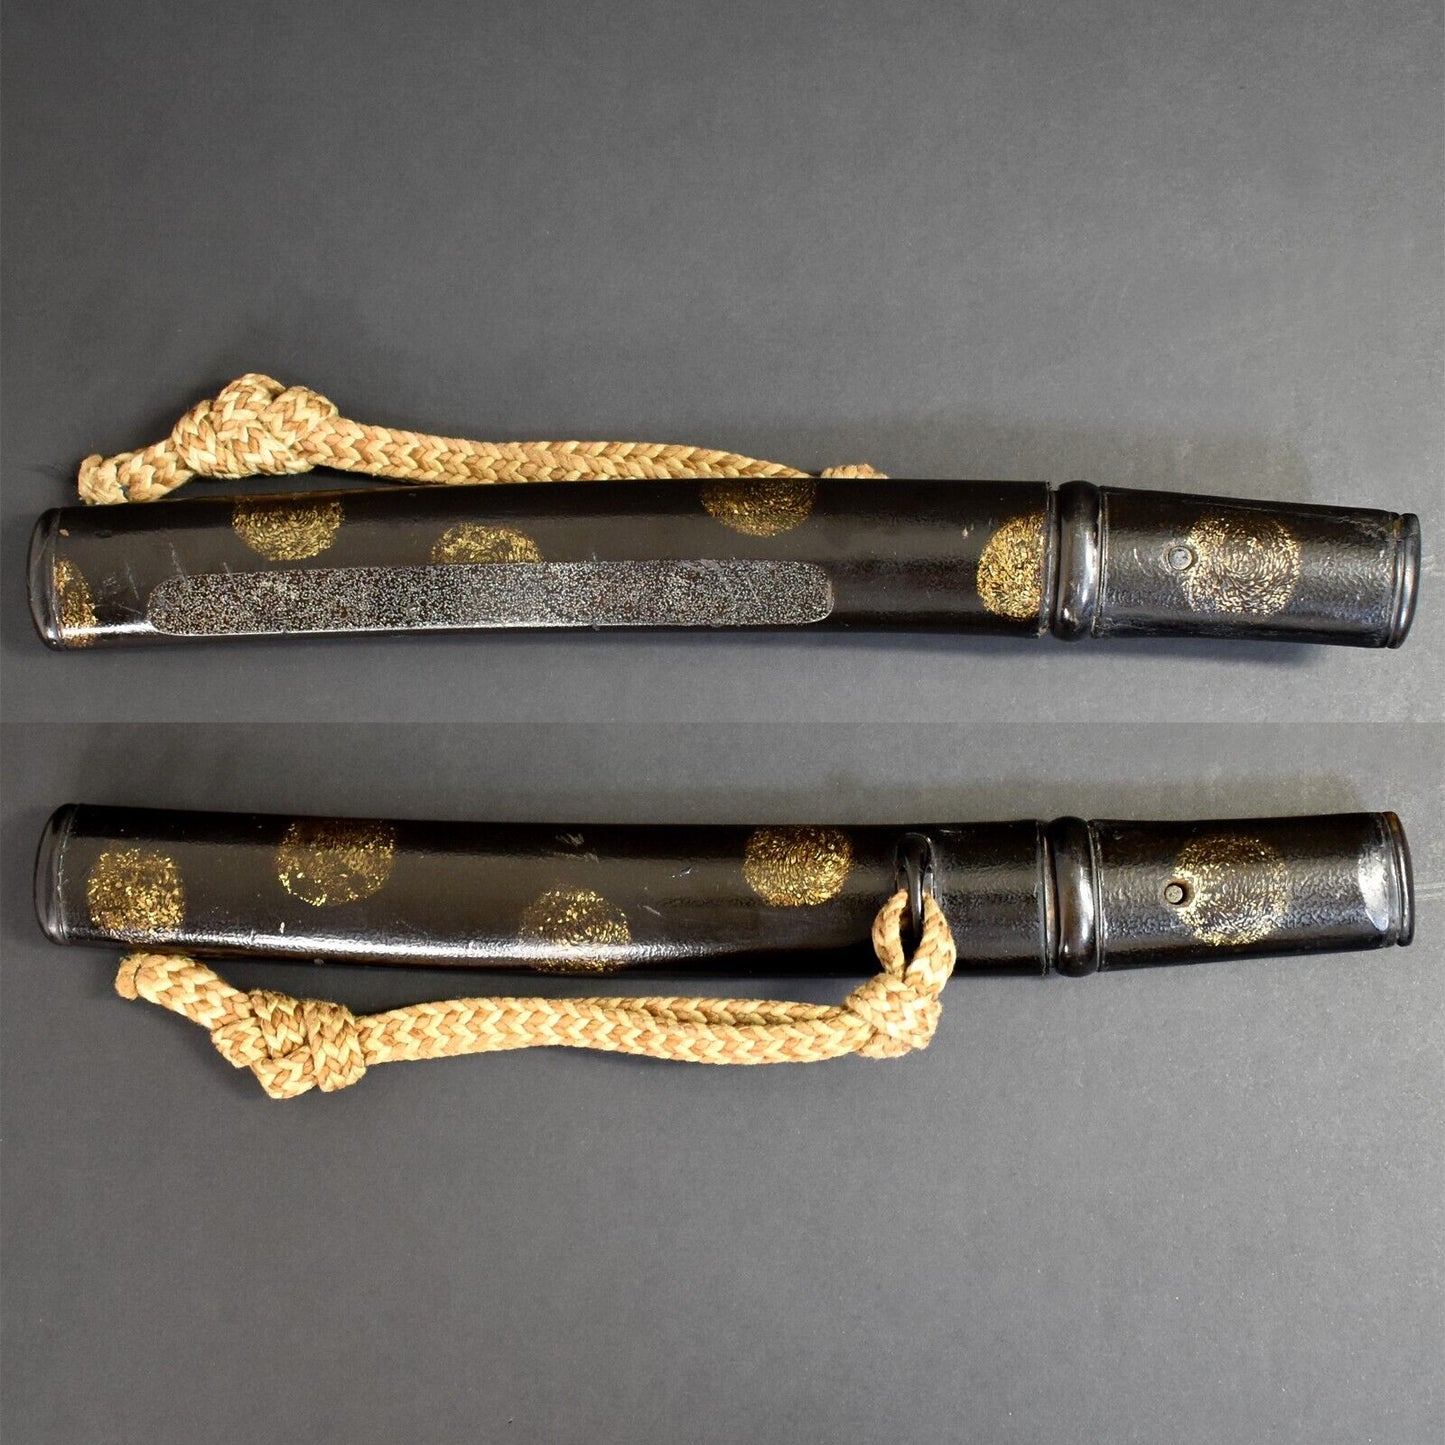 Japanese Authentic Short Sword Tanto Antique Samurai Dagger Tamahagane Weapon Collectible.